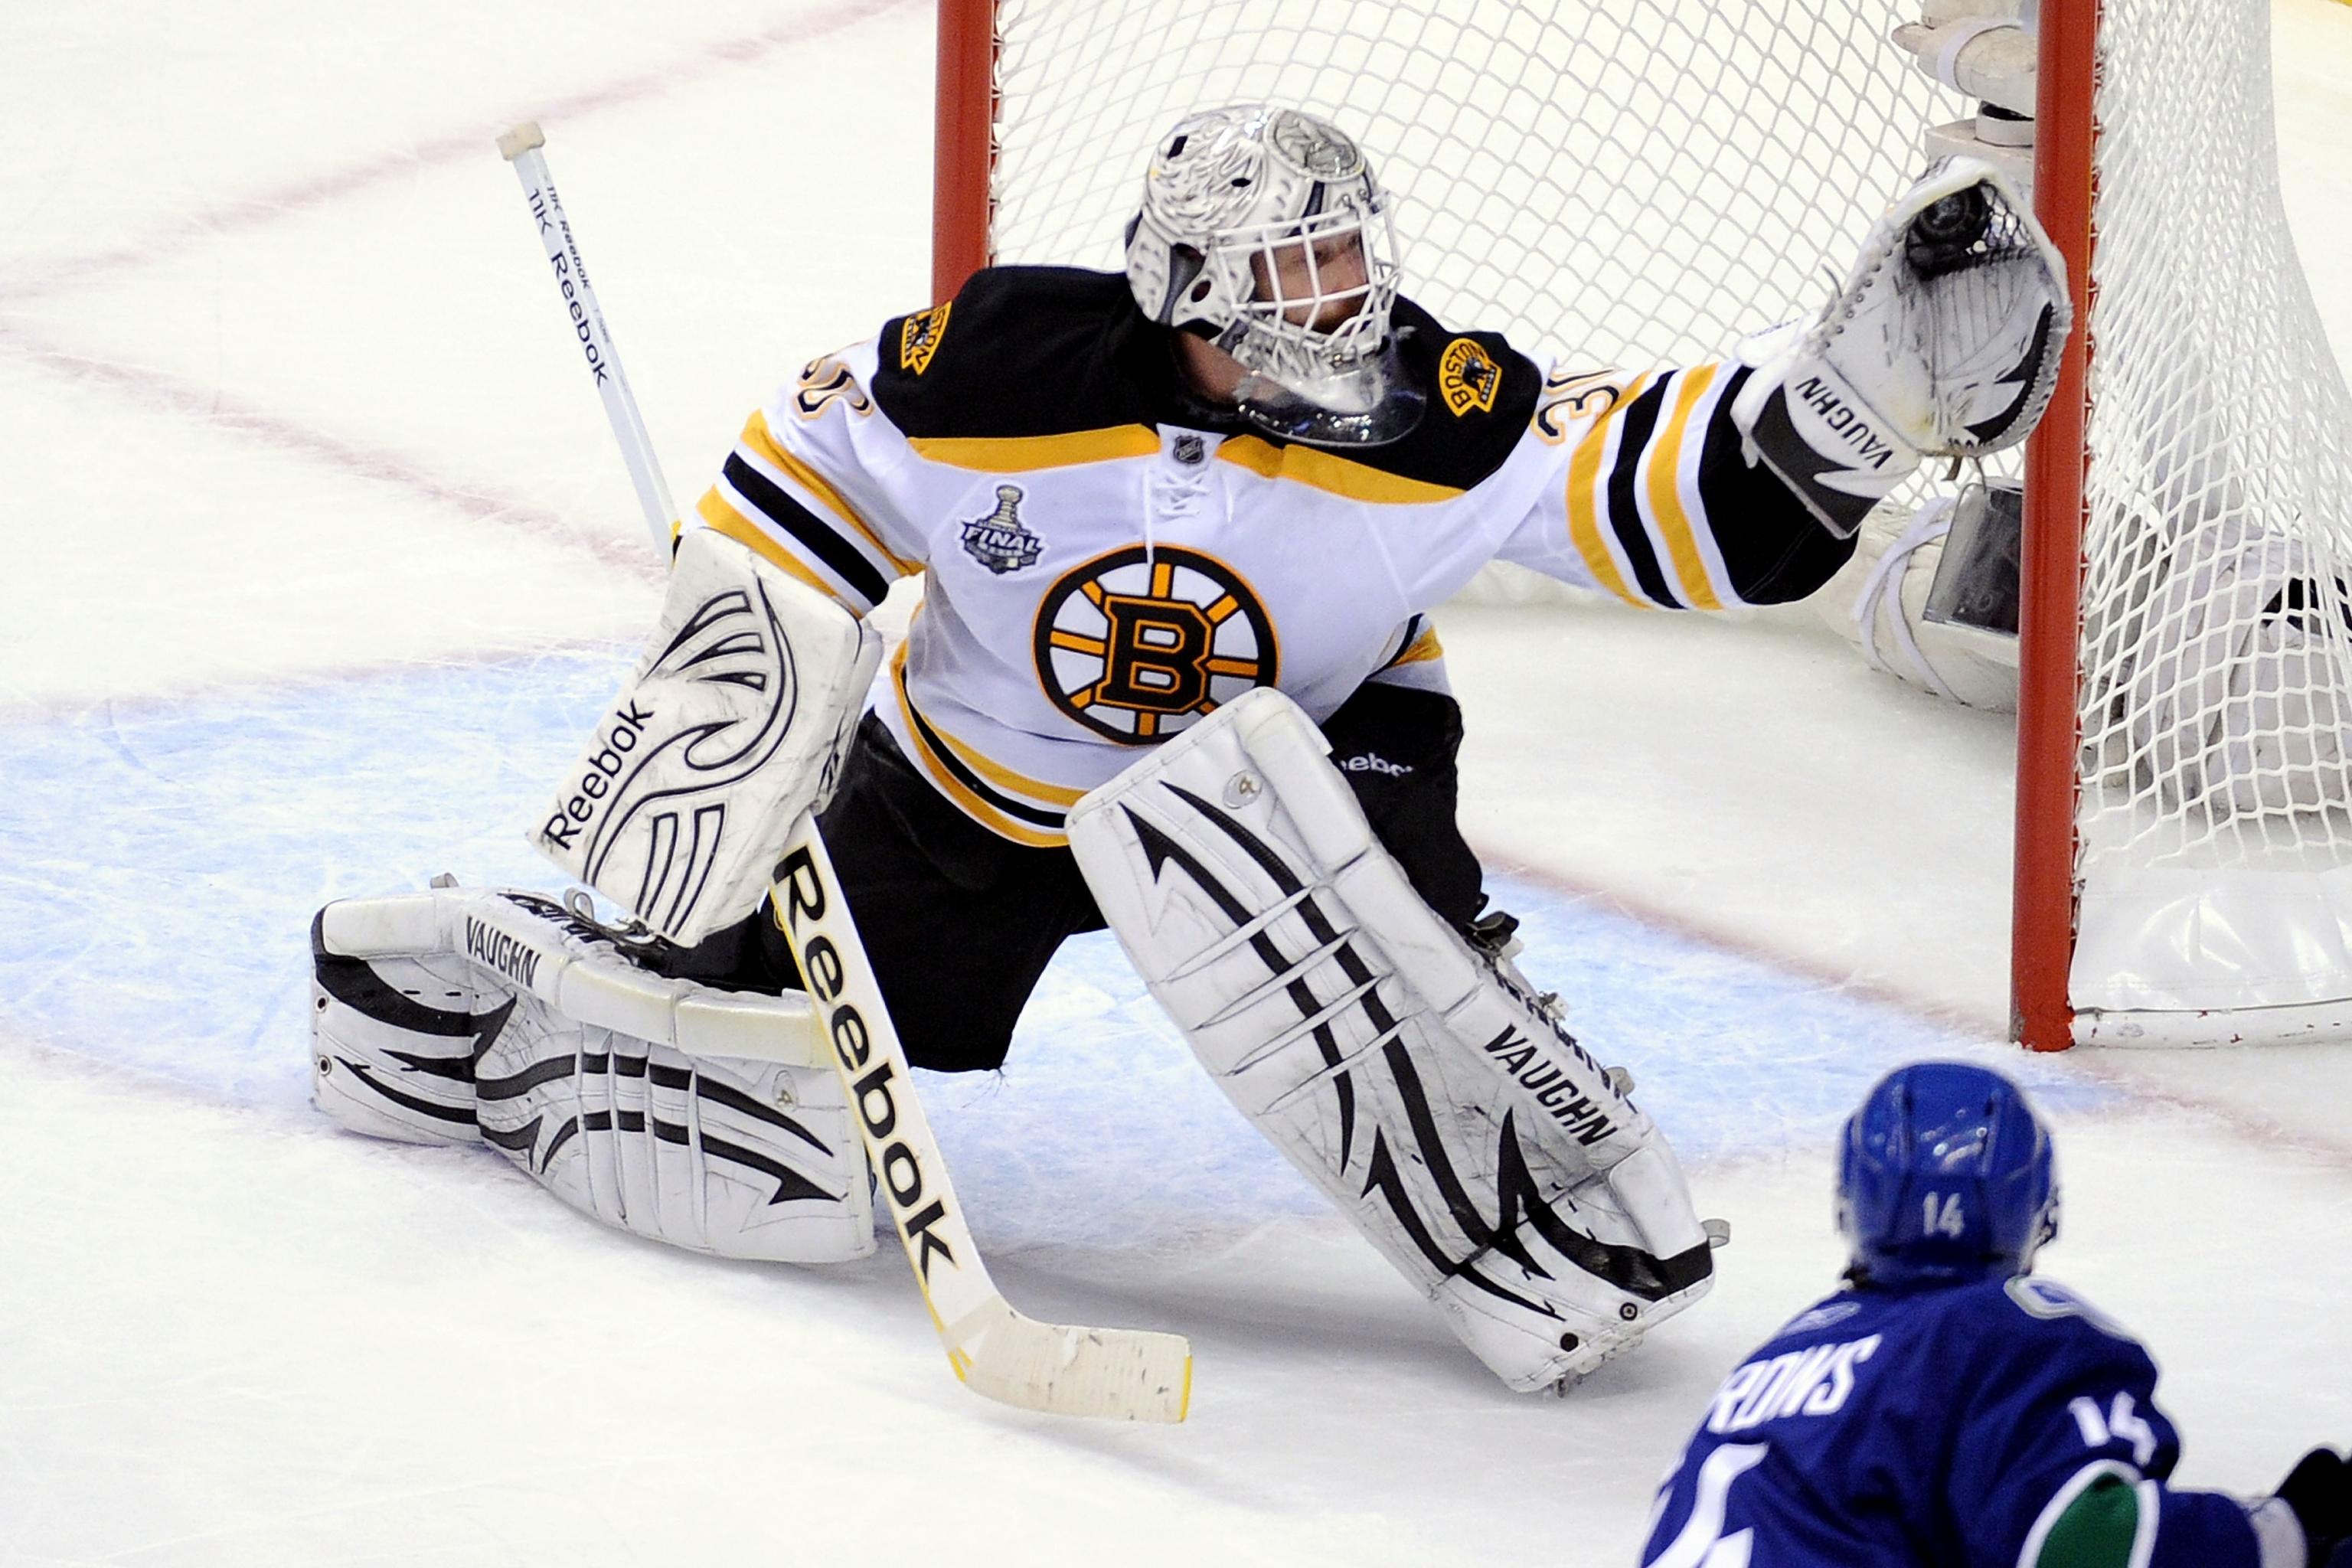 Boston Bruins goalie Tim Thomas makes a diving save as